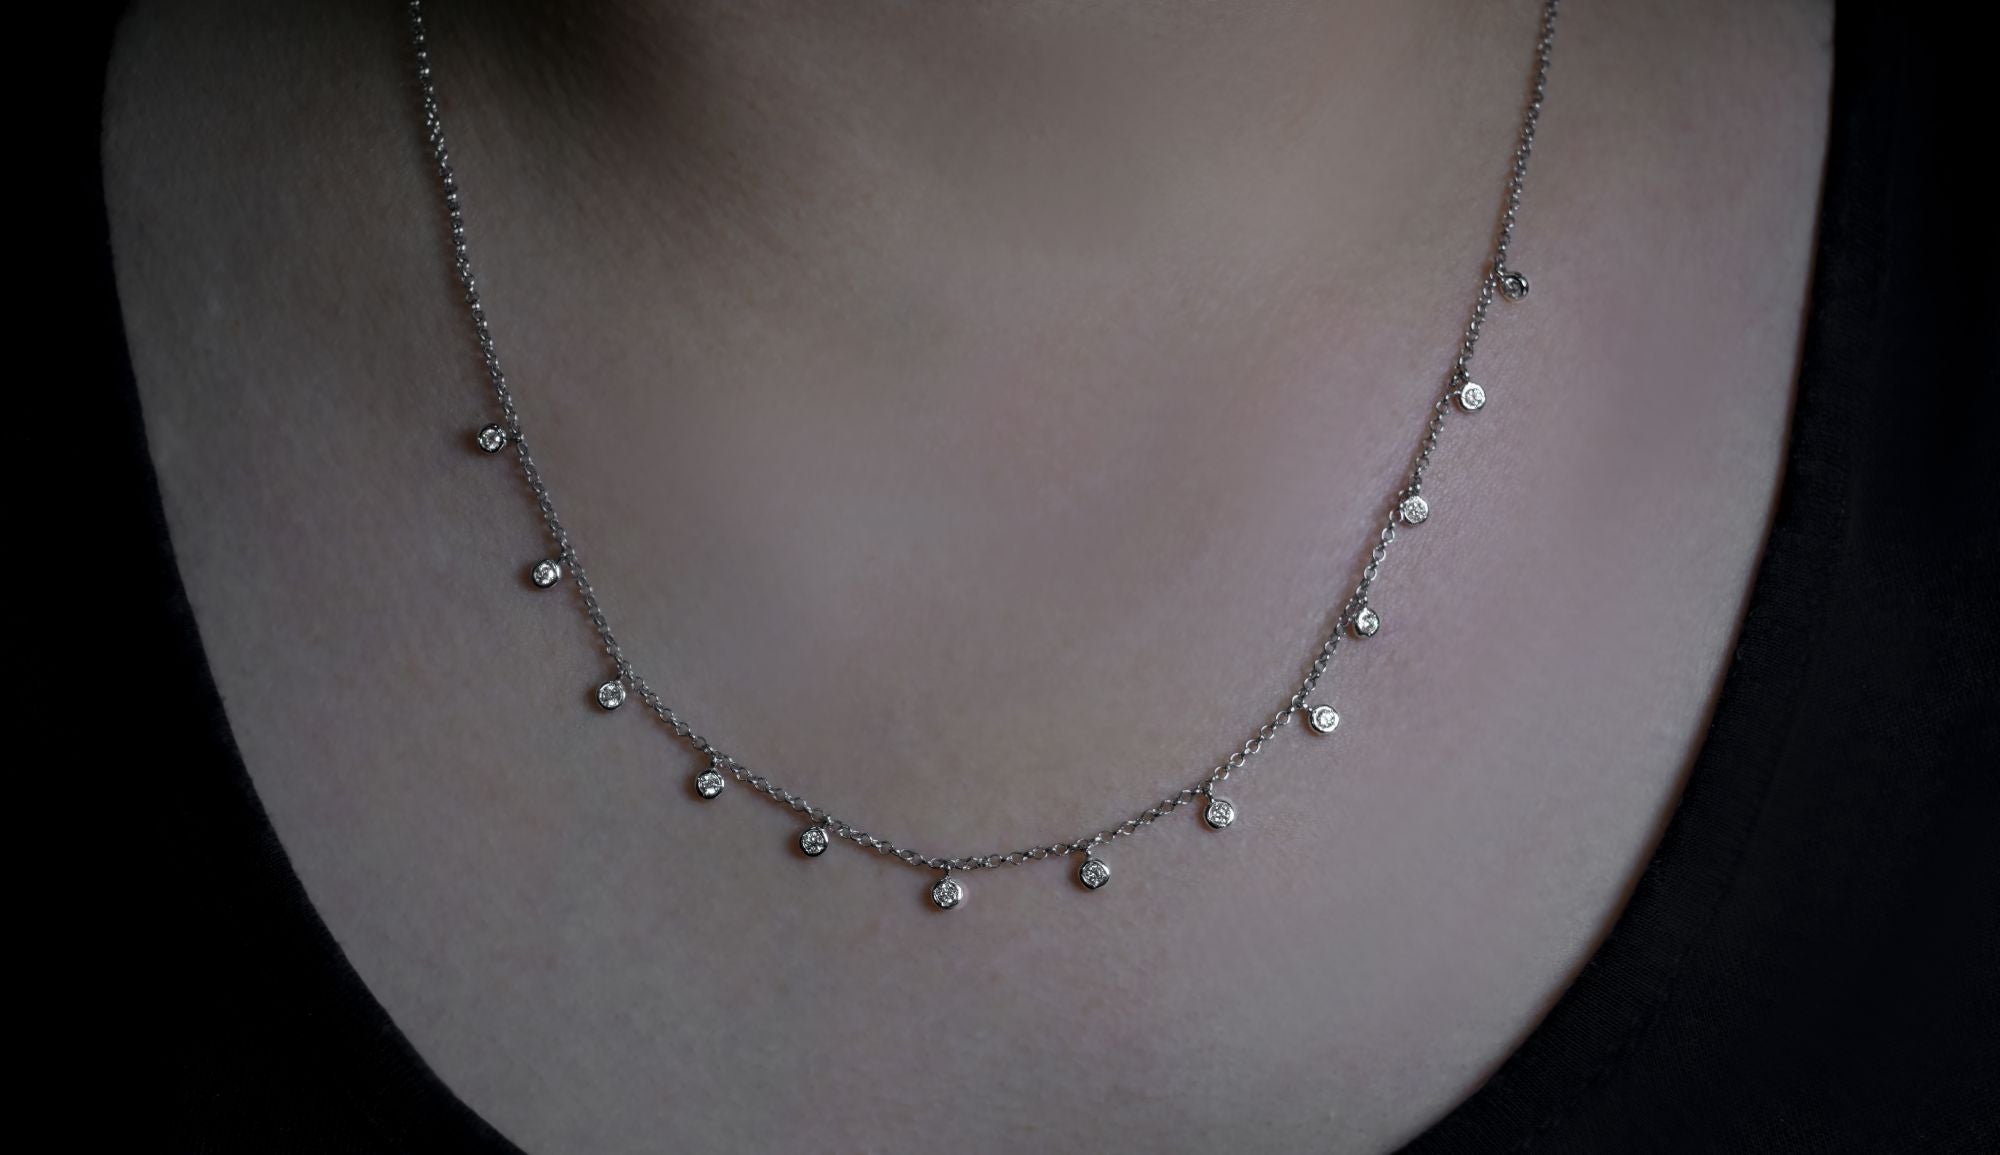 Patil Necklace by Carisma Jewelry